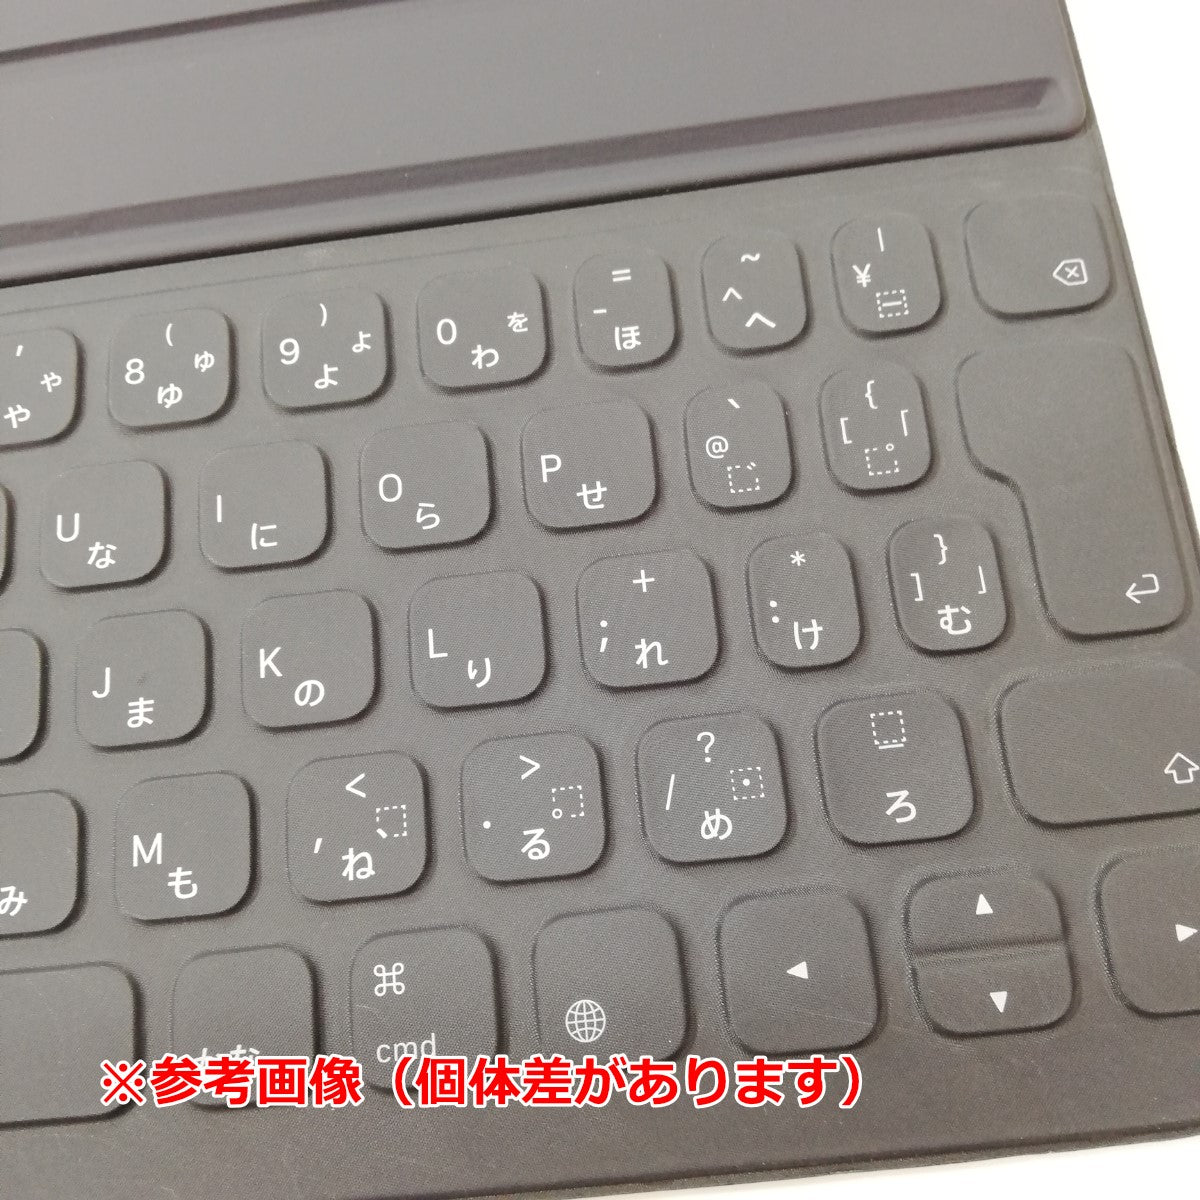 中古品】 iPadPro(11-inch) Smart Keyboard Folio MU8G2J/A [管理番号 